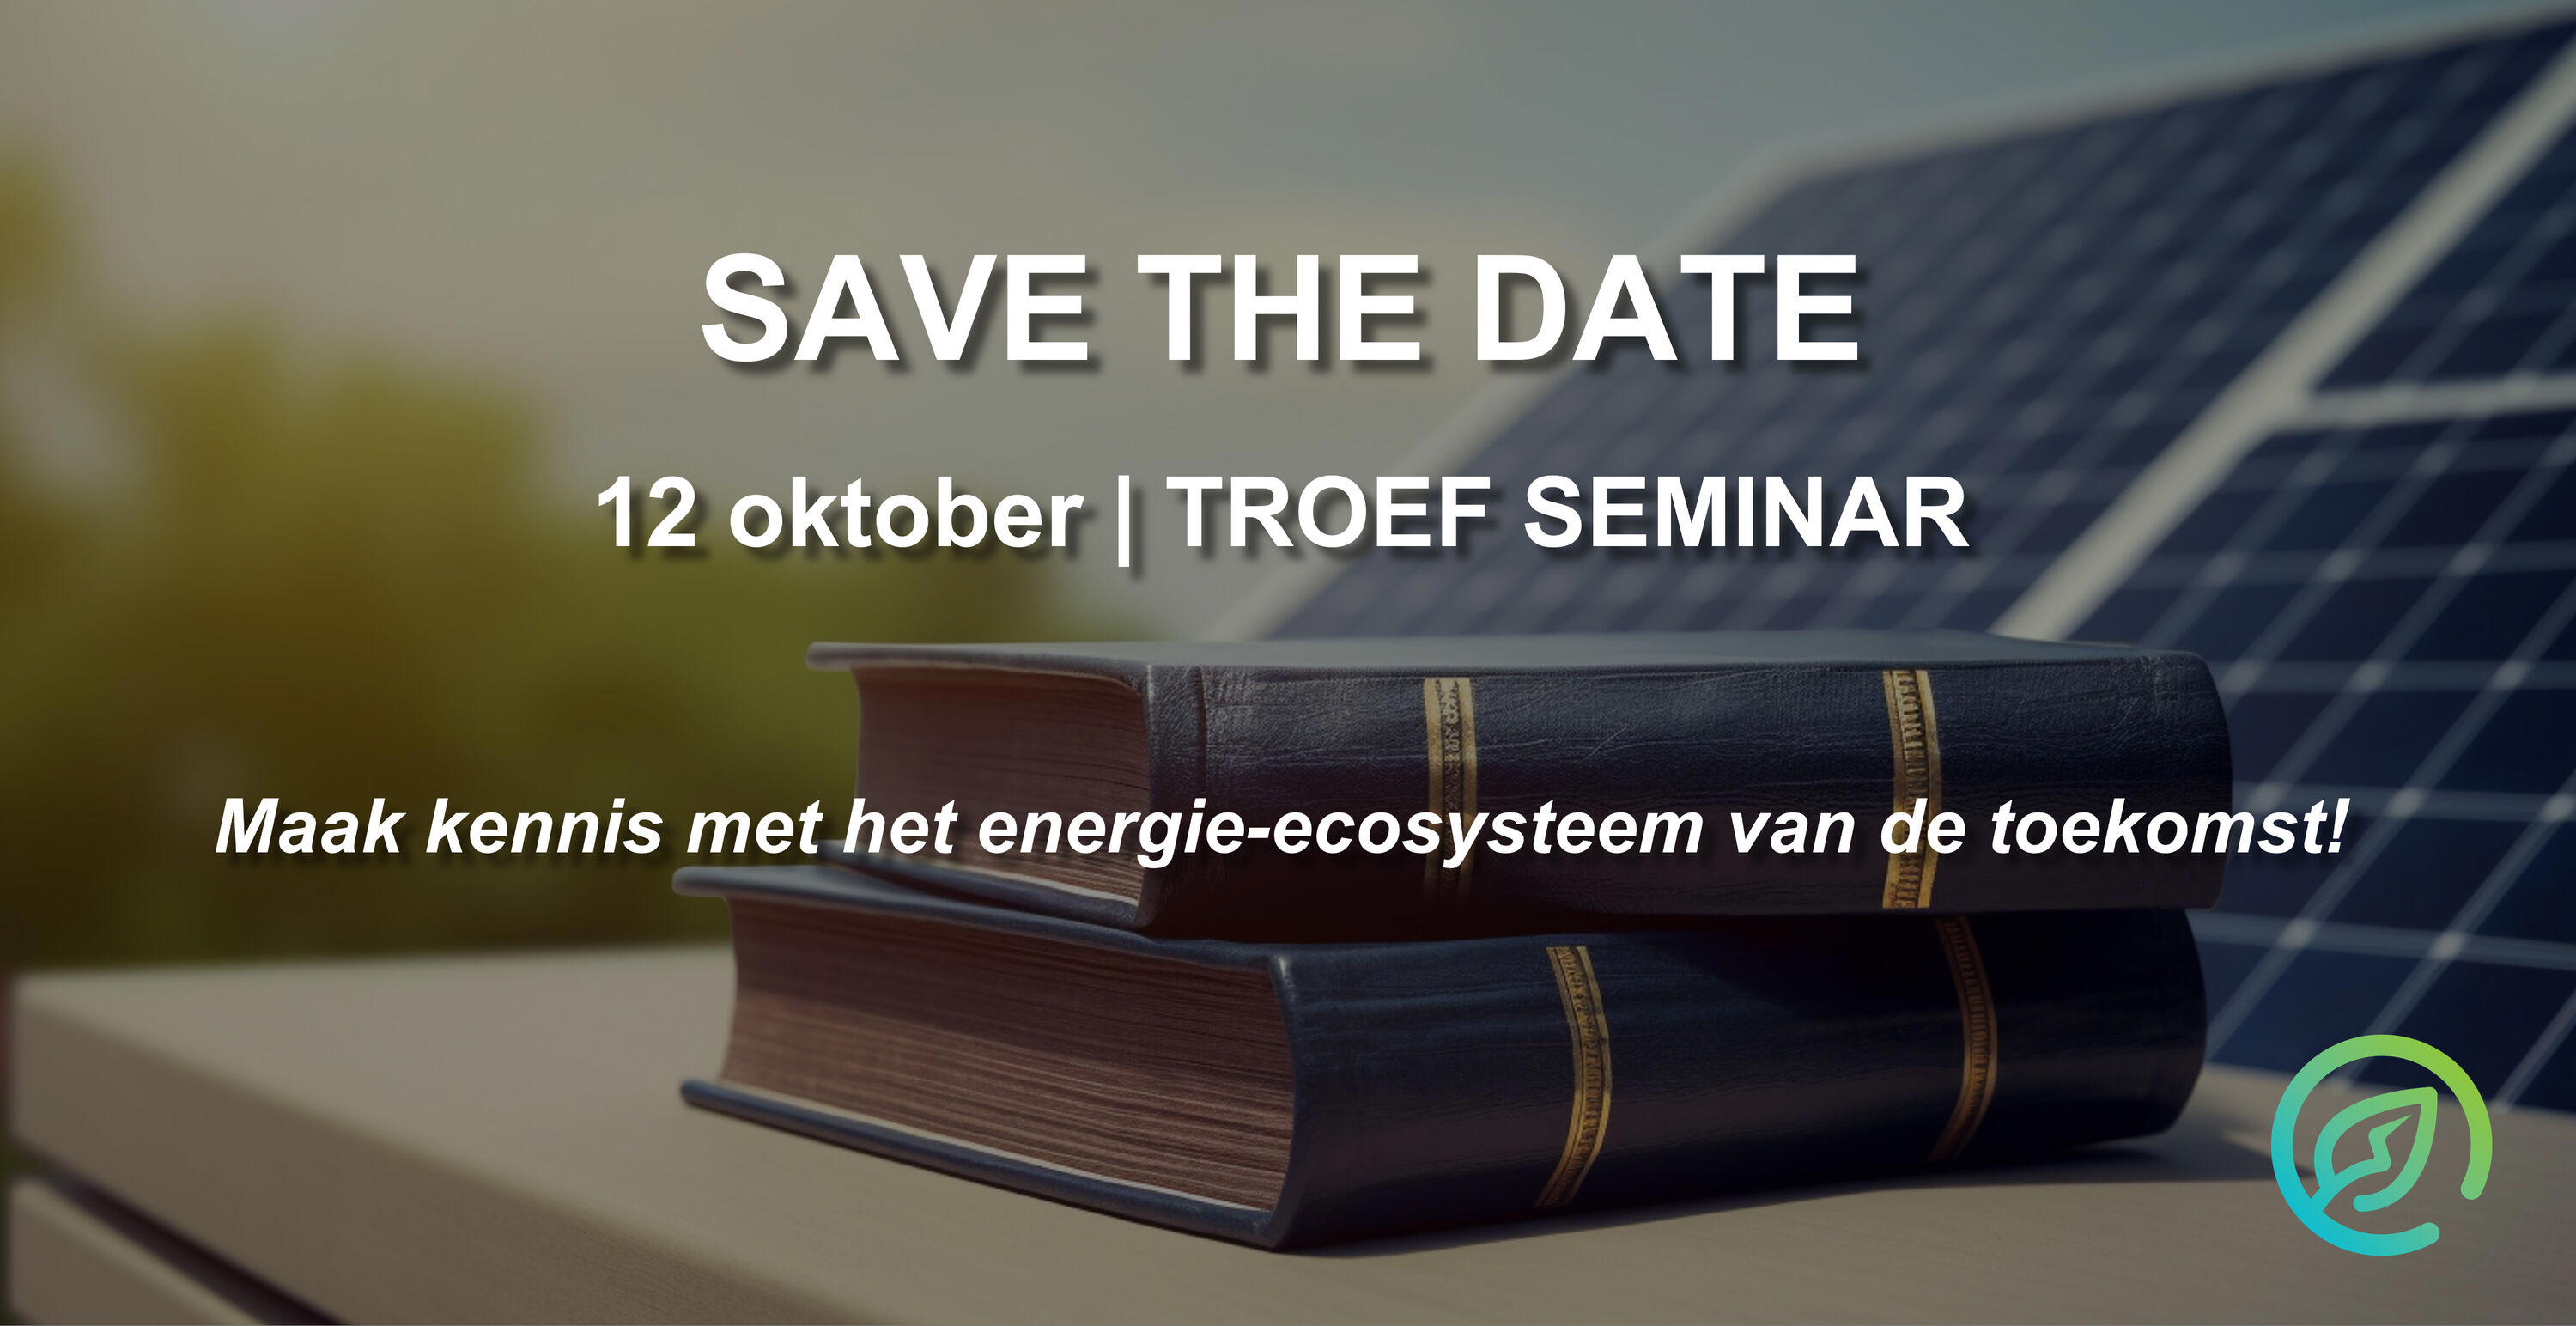 TROEF Seminar 12 oktober